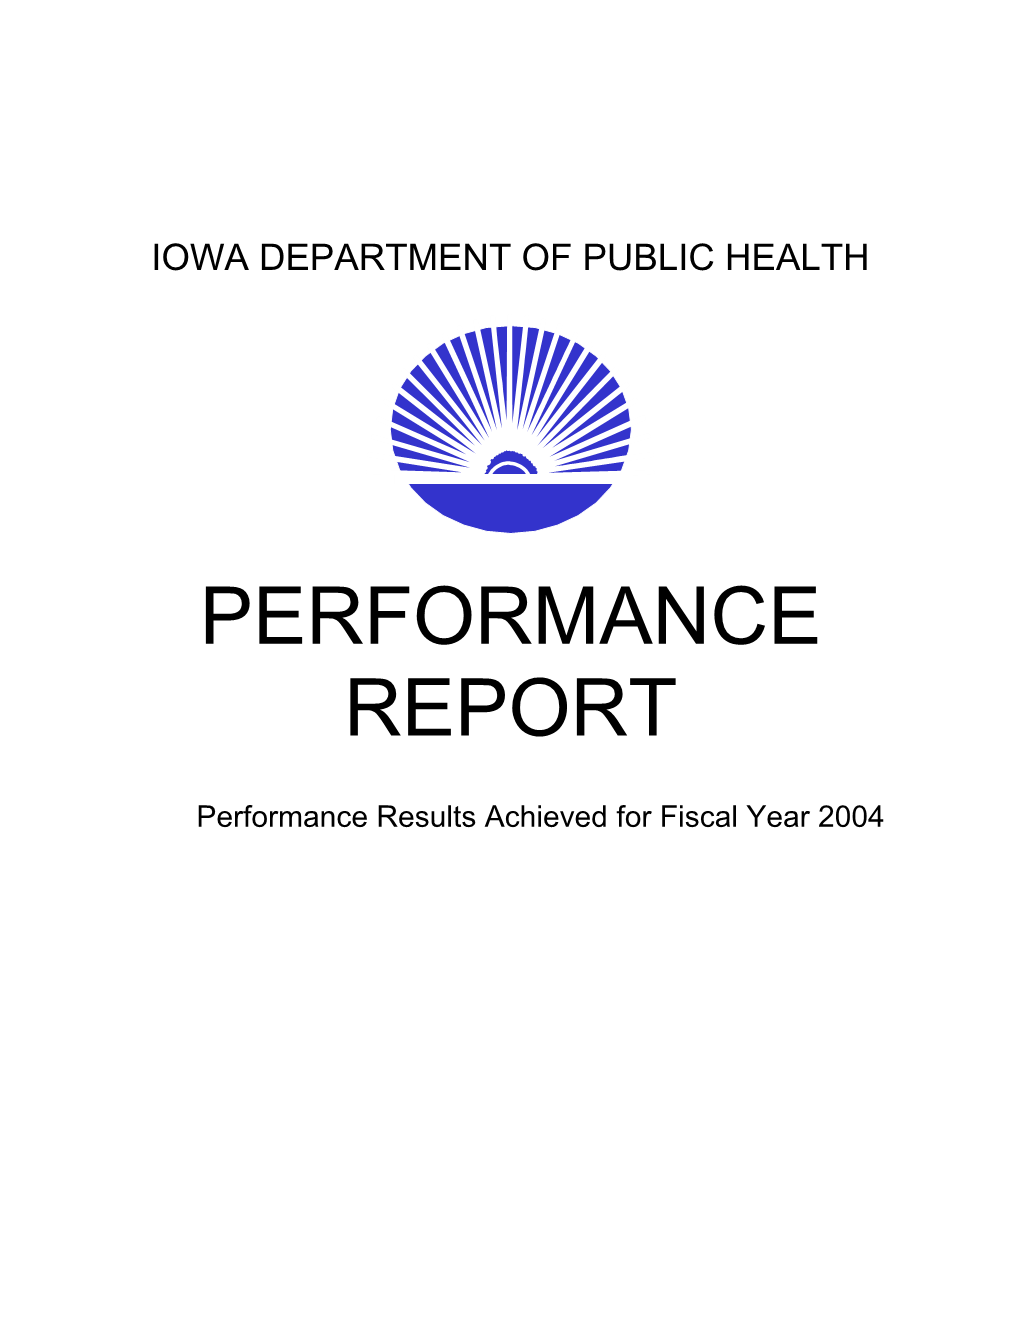 2004 IDPH Performance Report